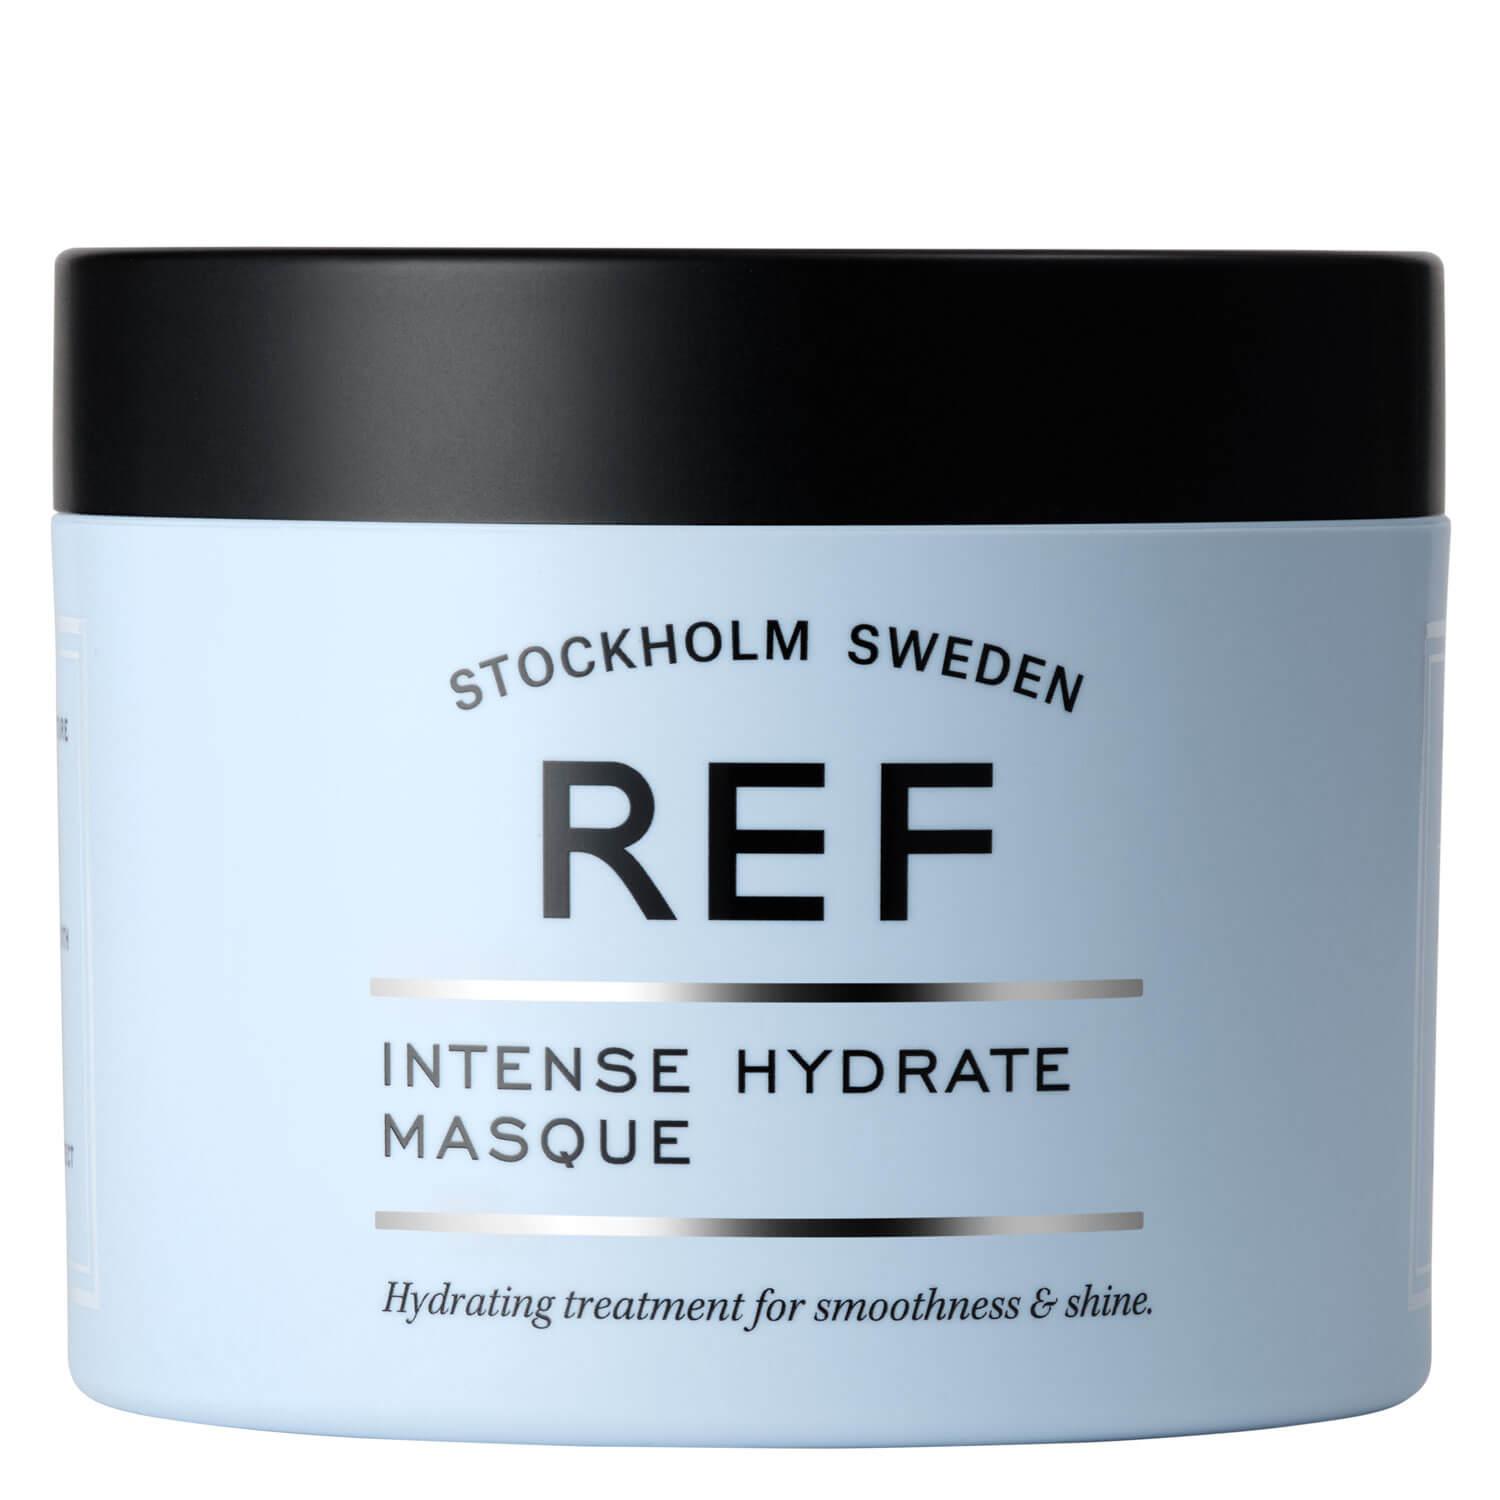 REF Treatment - Intense Hydrate Masque